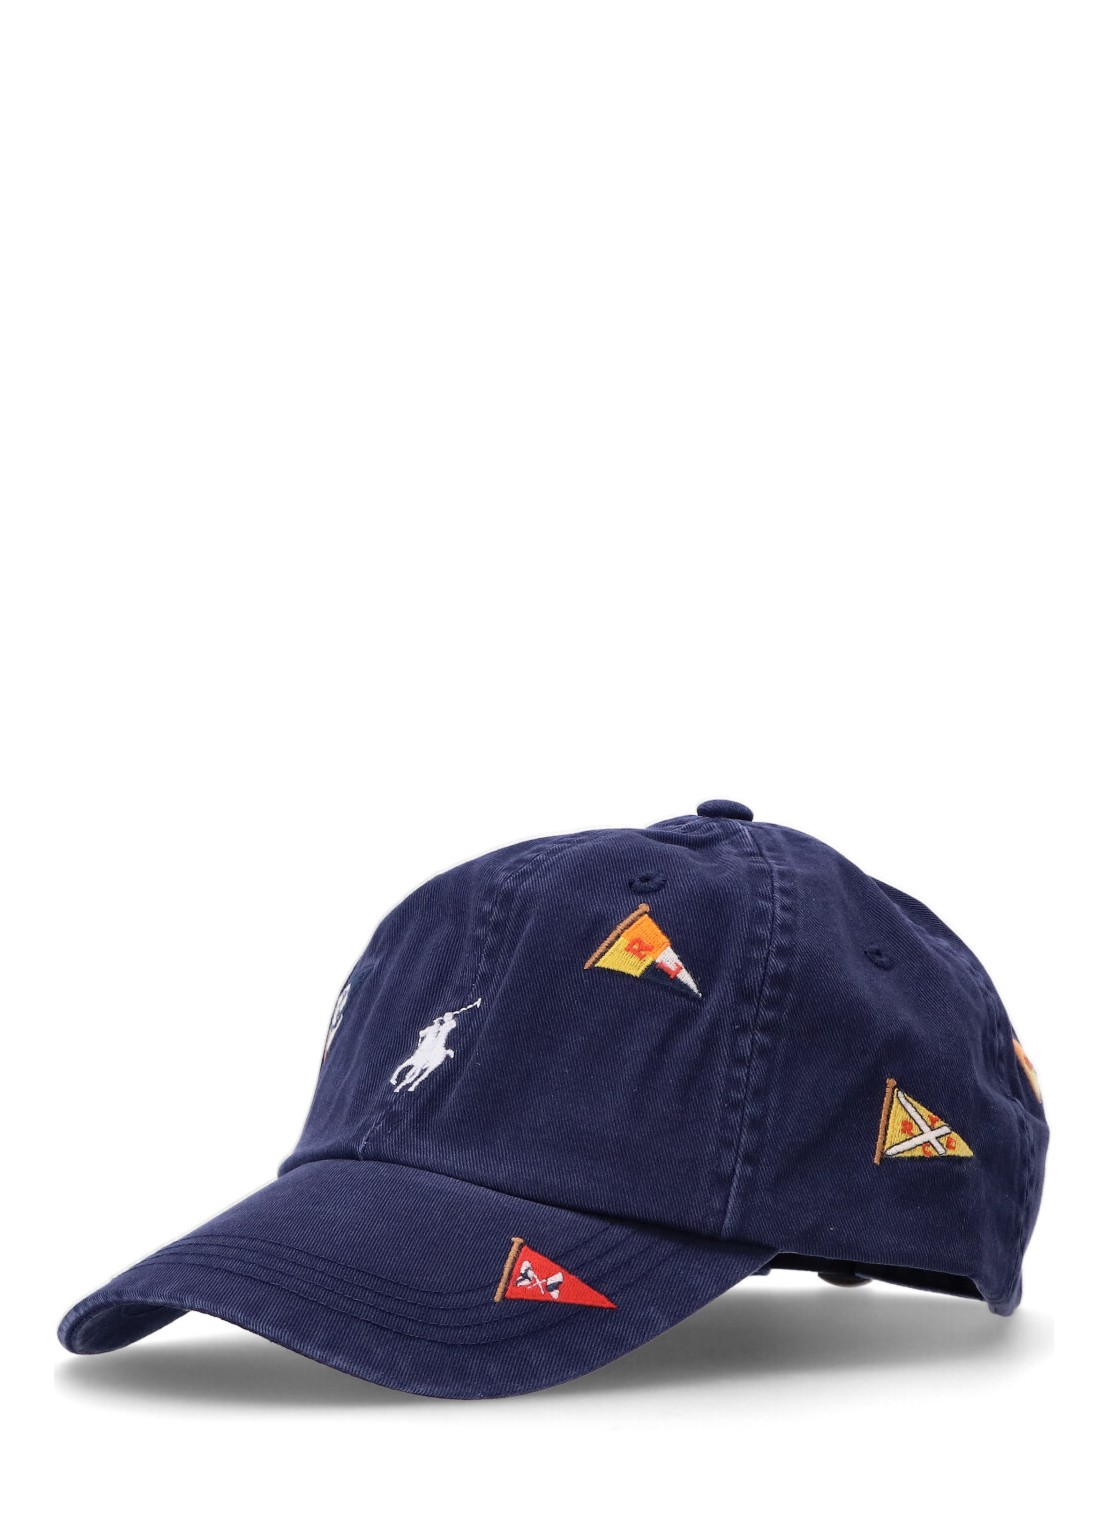 Gorras polo ralph lauren cap man cls sprt cap-cap-hat 710926397001 newport navy w flag emb talla Azu